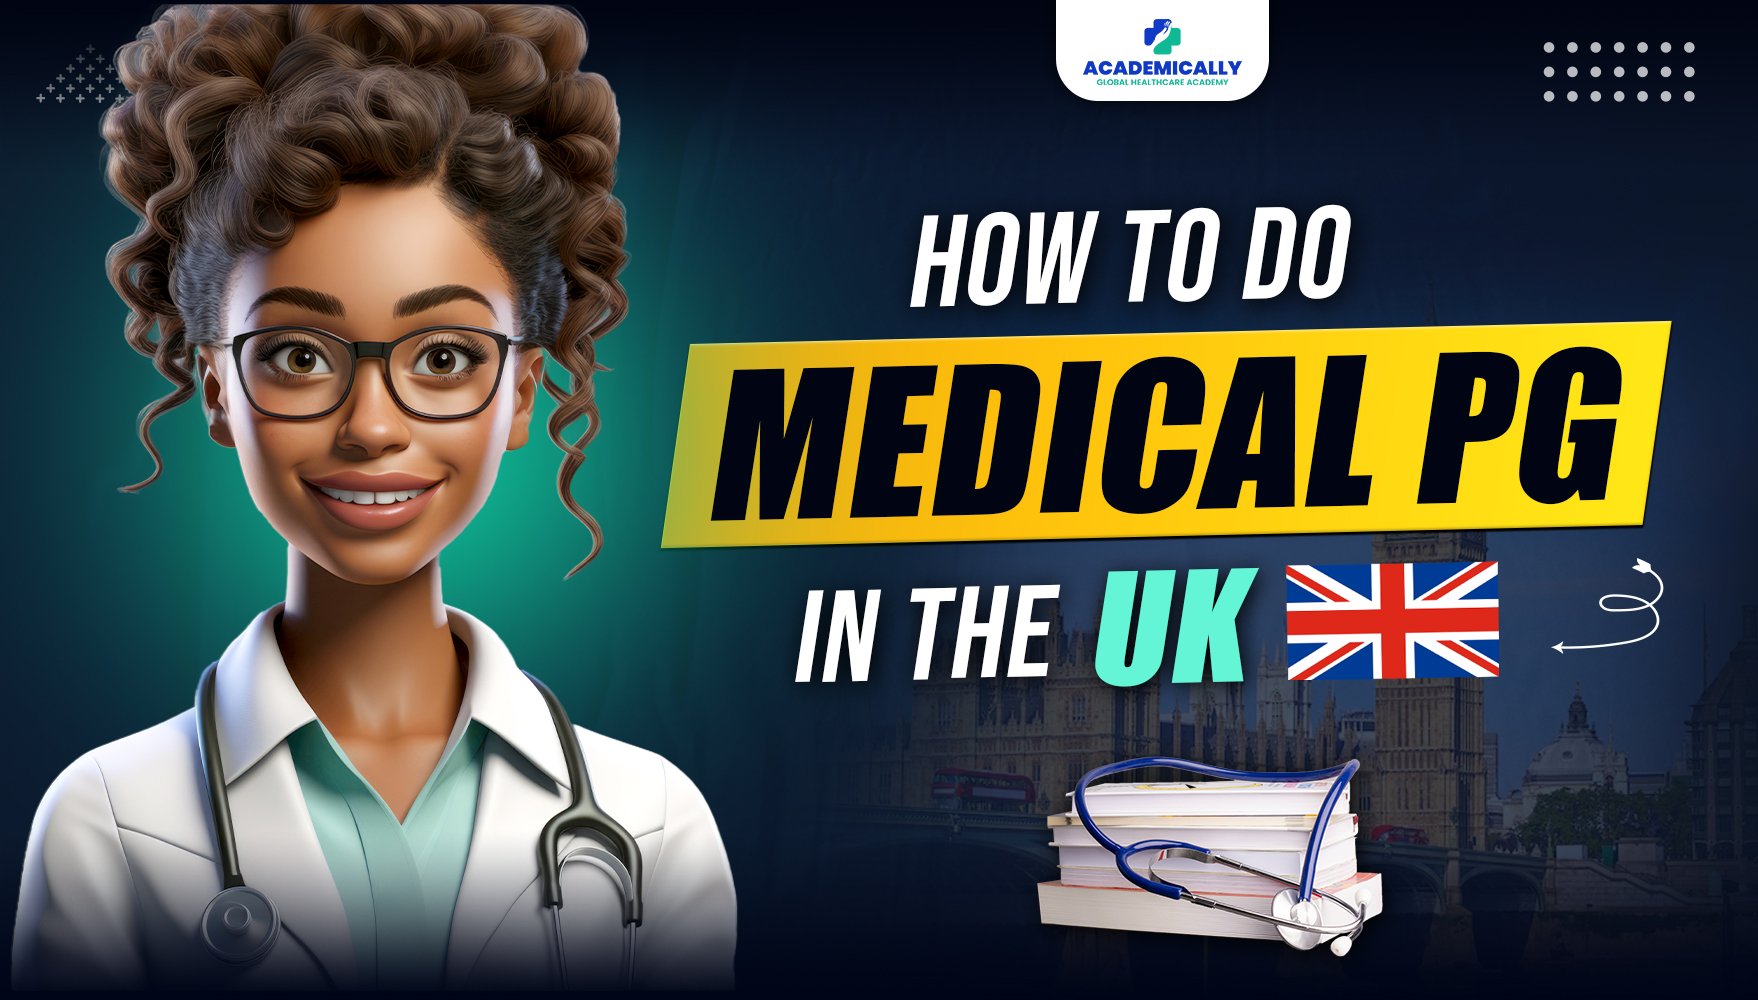 Medical PG in the UK